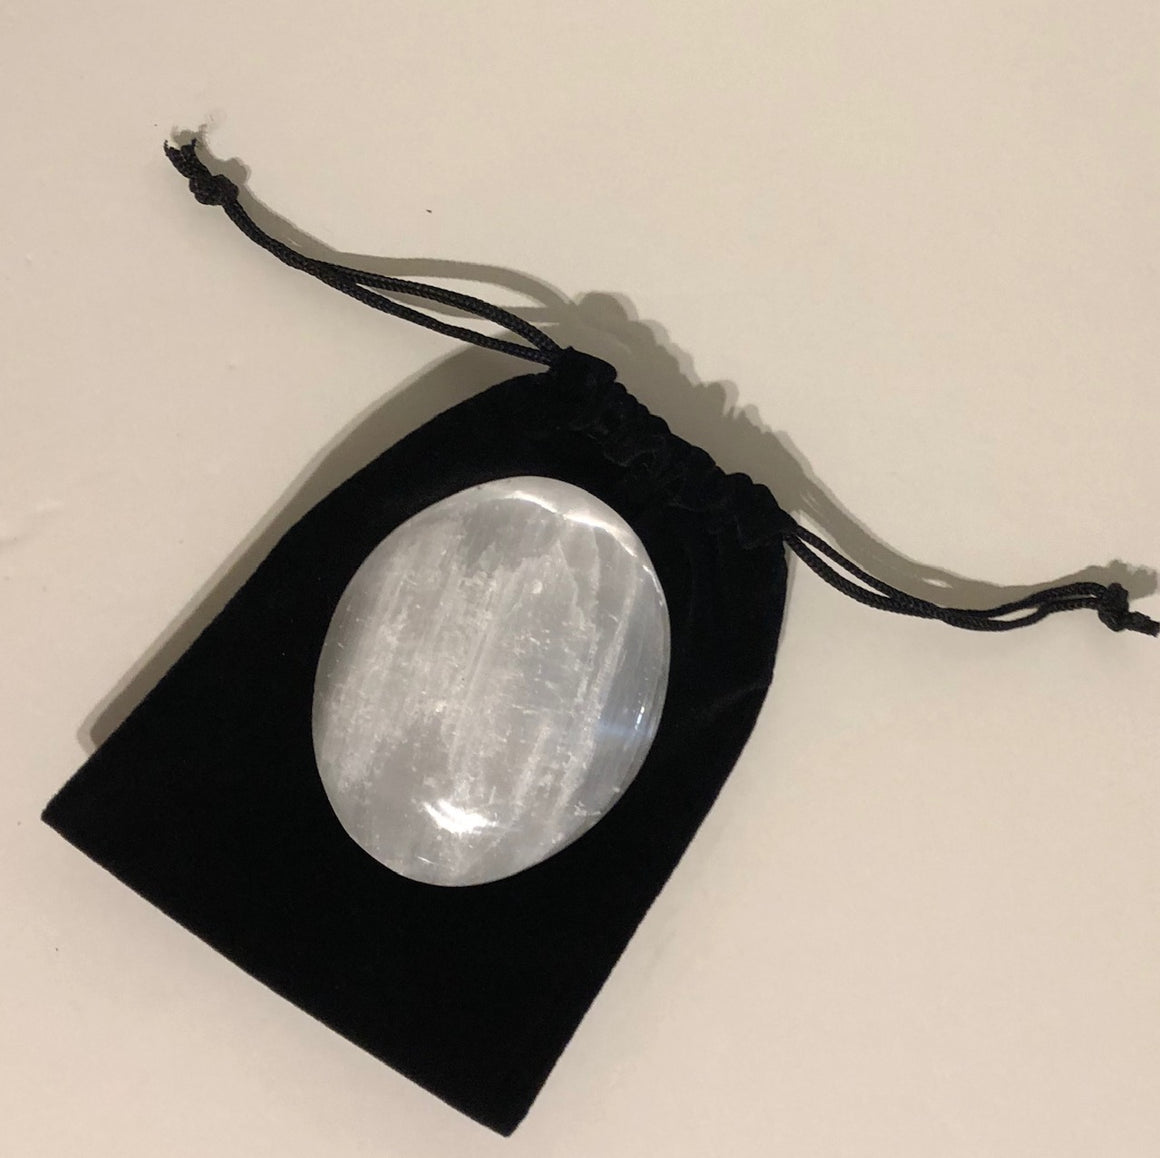 Selenite Crystal Paperweight in velvet pouch - 3"-4"